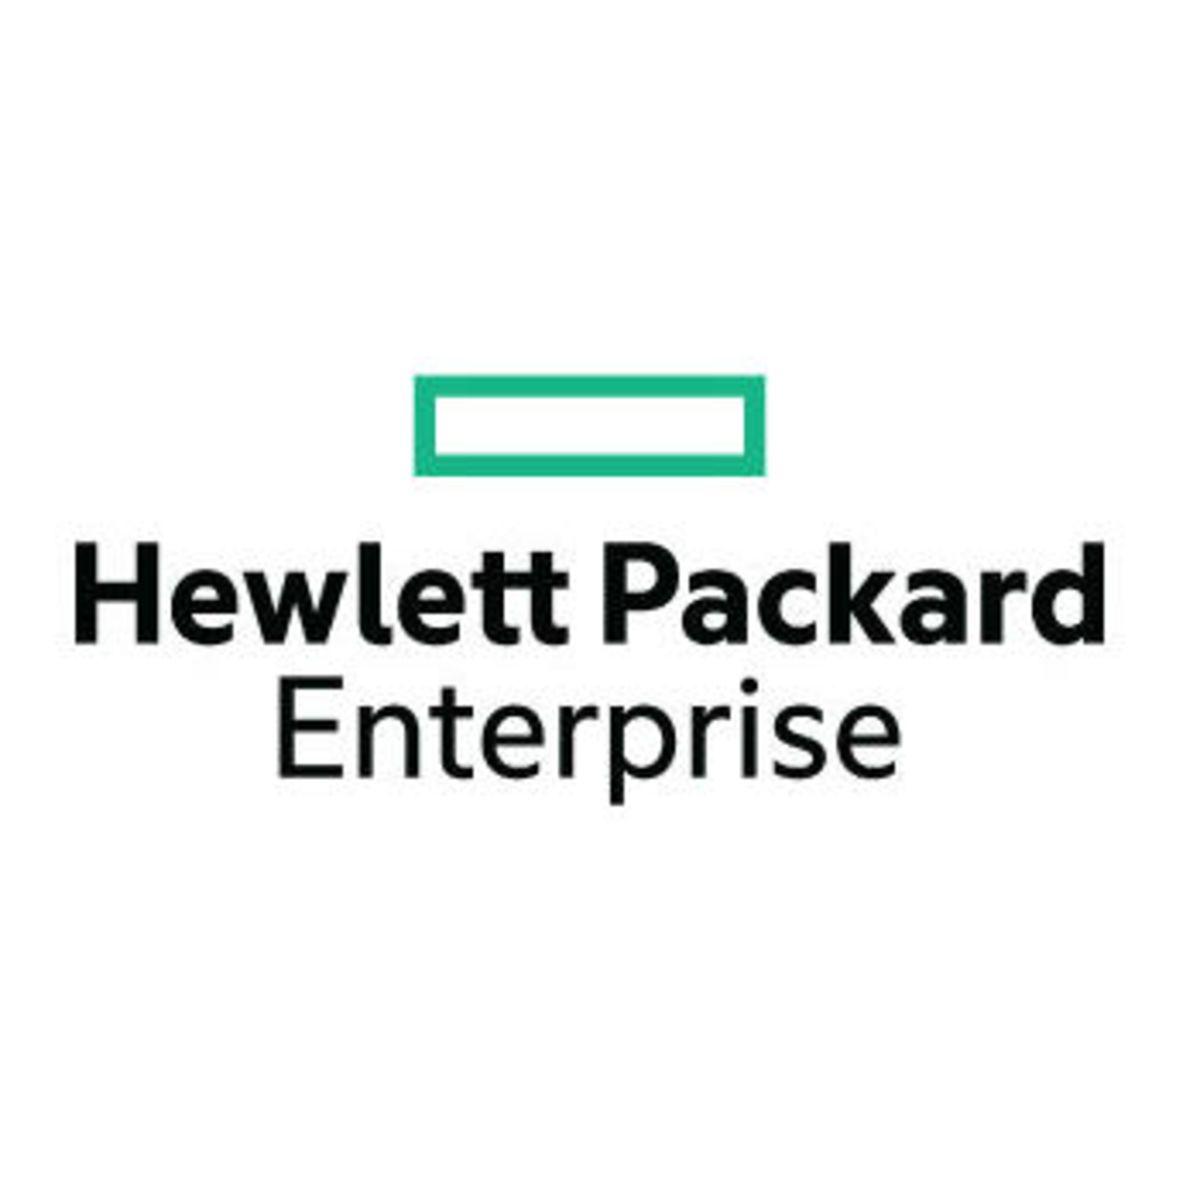 New HP Enterprise Logo - Hewlett-Packard-Enterprise-Logo - The Cheers